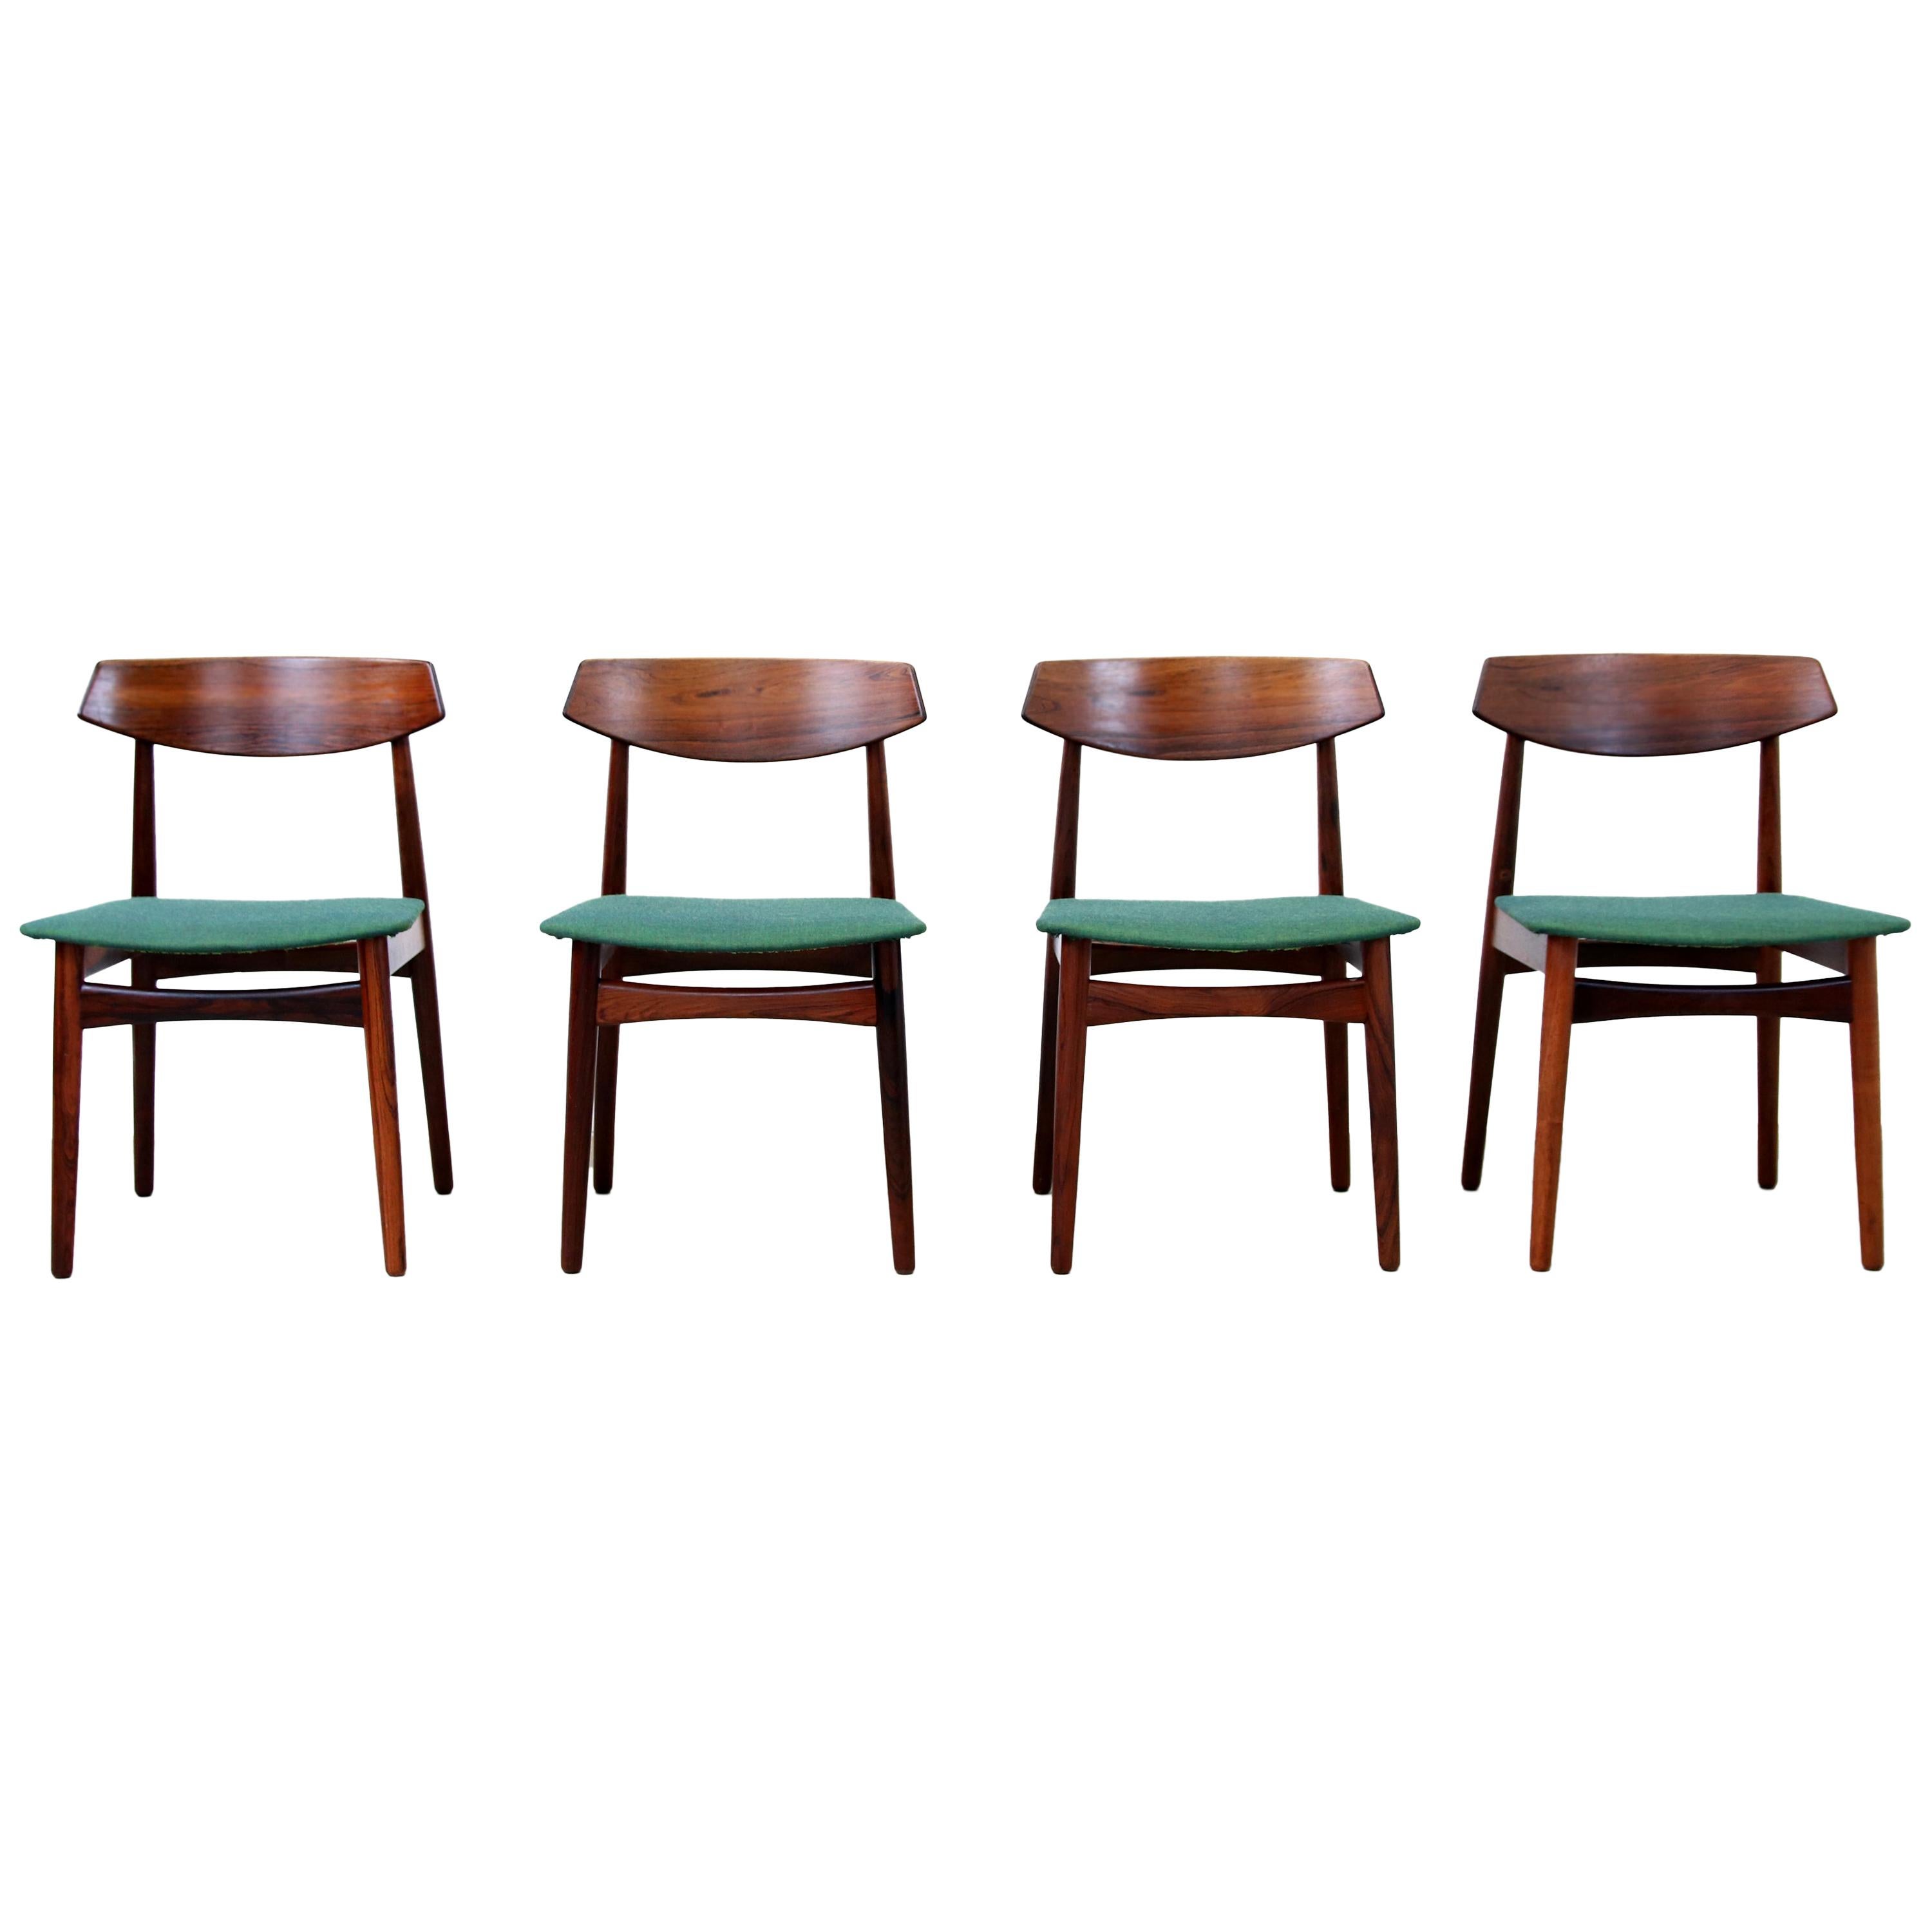 Set of 4 Mid Century teak Danish Design Chairs by Skovby Mobler, Denmark 1960's